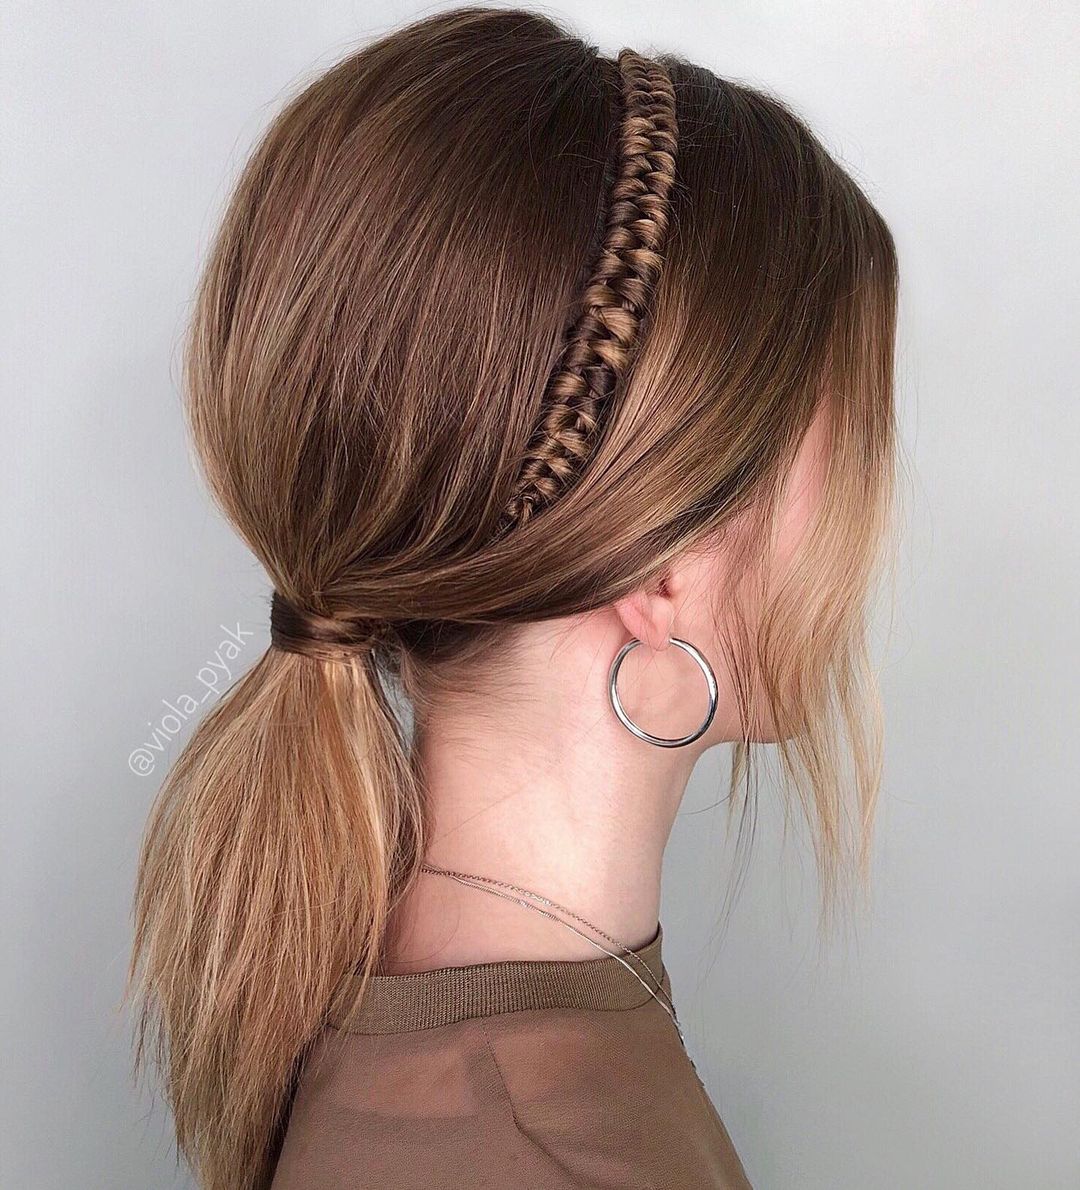 low ponytail with braid